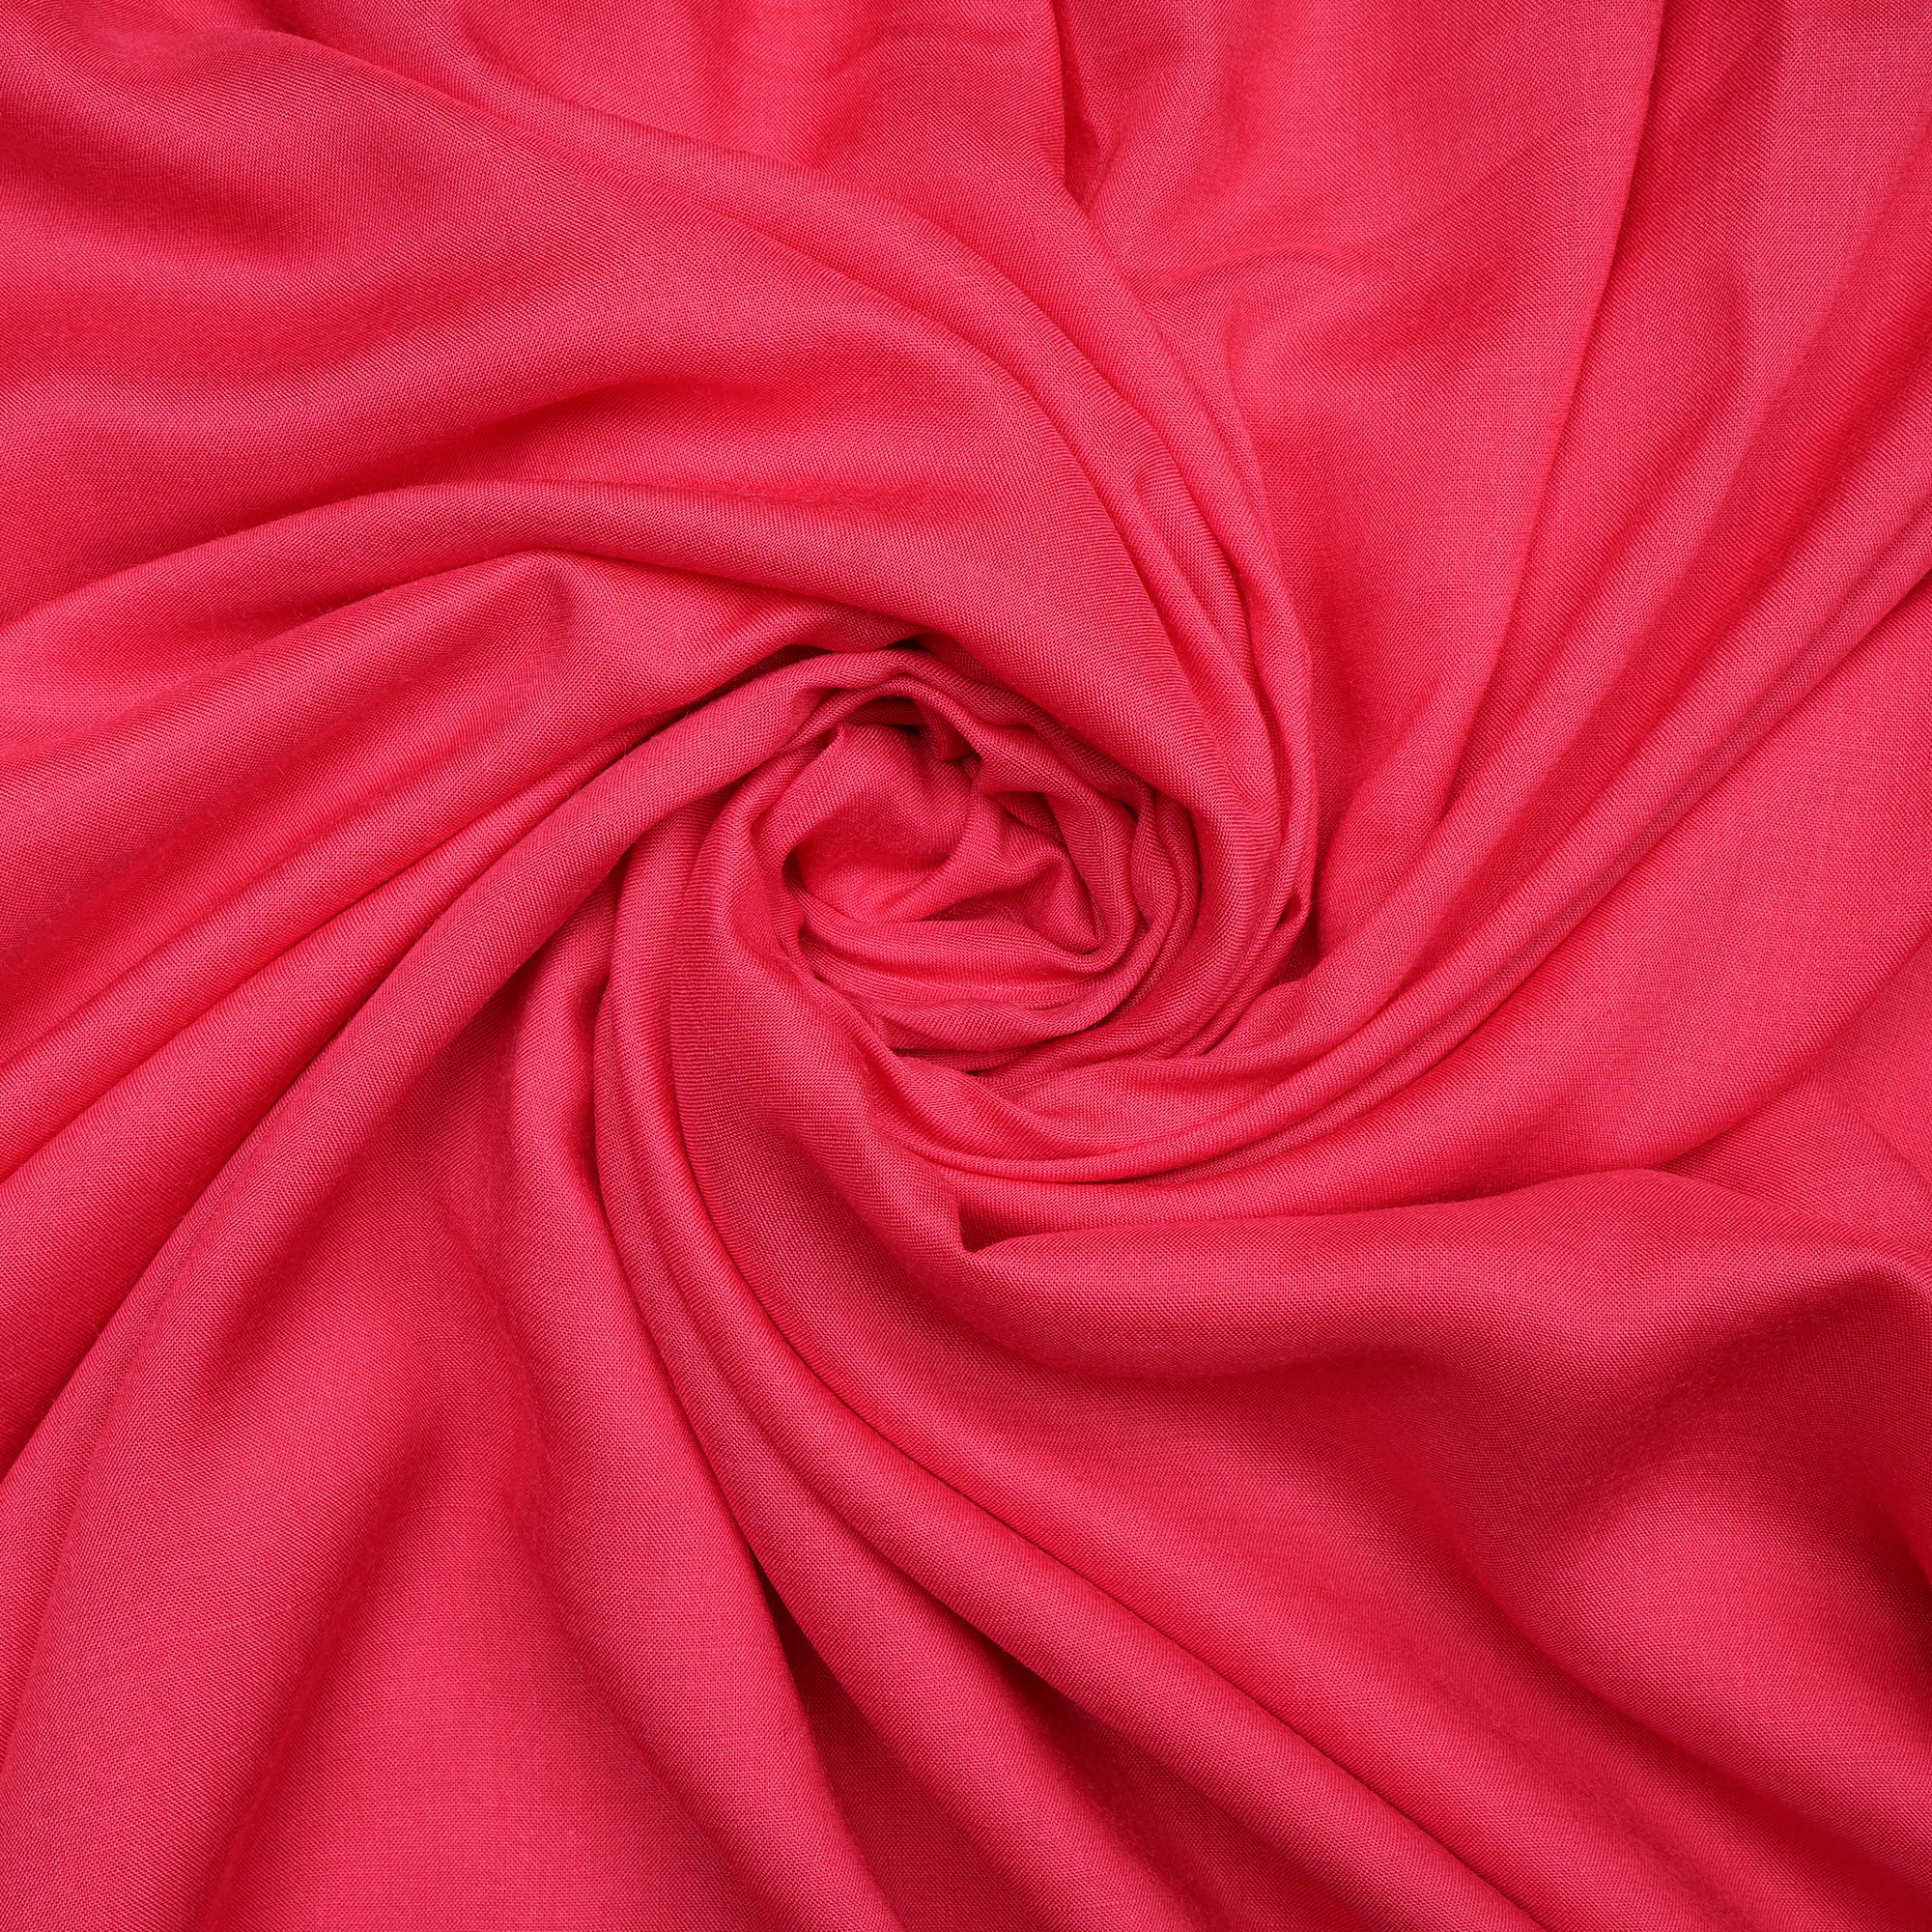 Brilliant Rose Piece Dyed Plain Modal Fabric